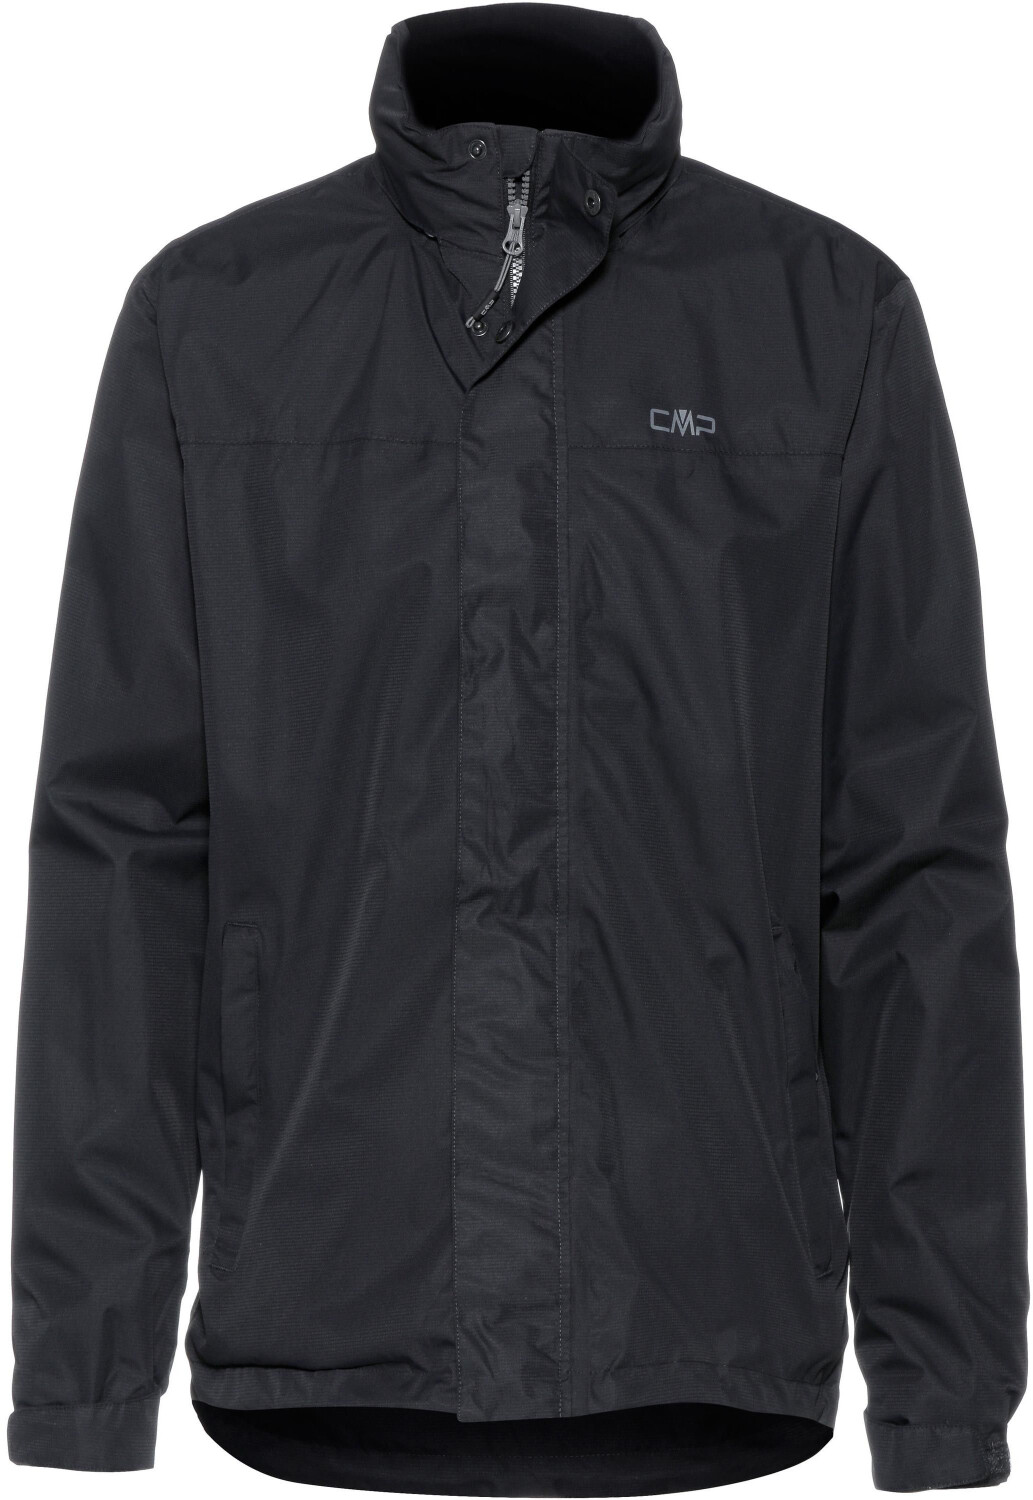 CMP Waterproof Jacket in Ripstop fabric (39X7367) ab 21,99 € |  Preisvergleich bei